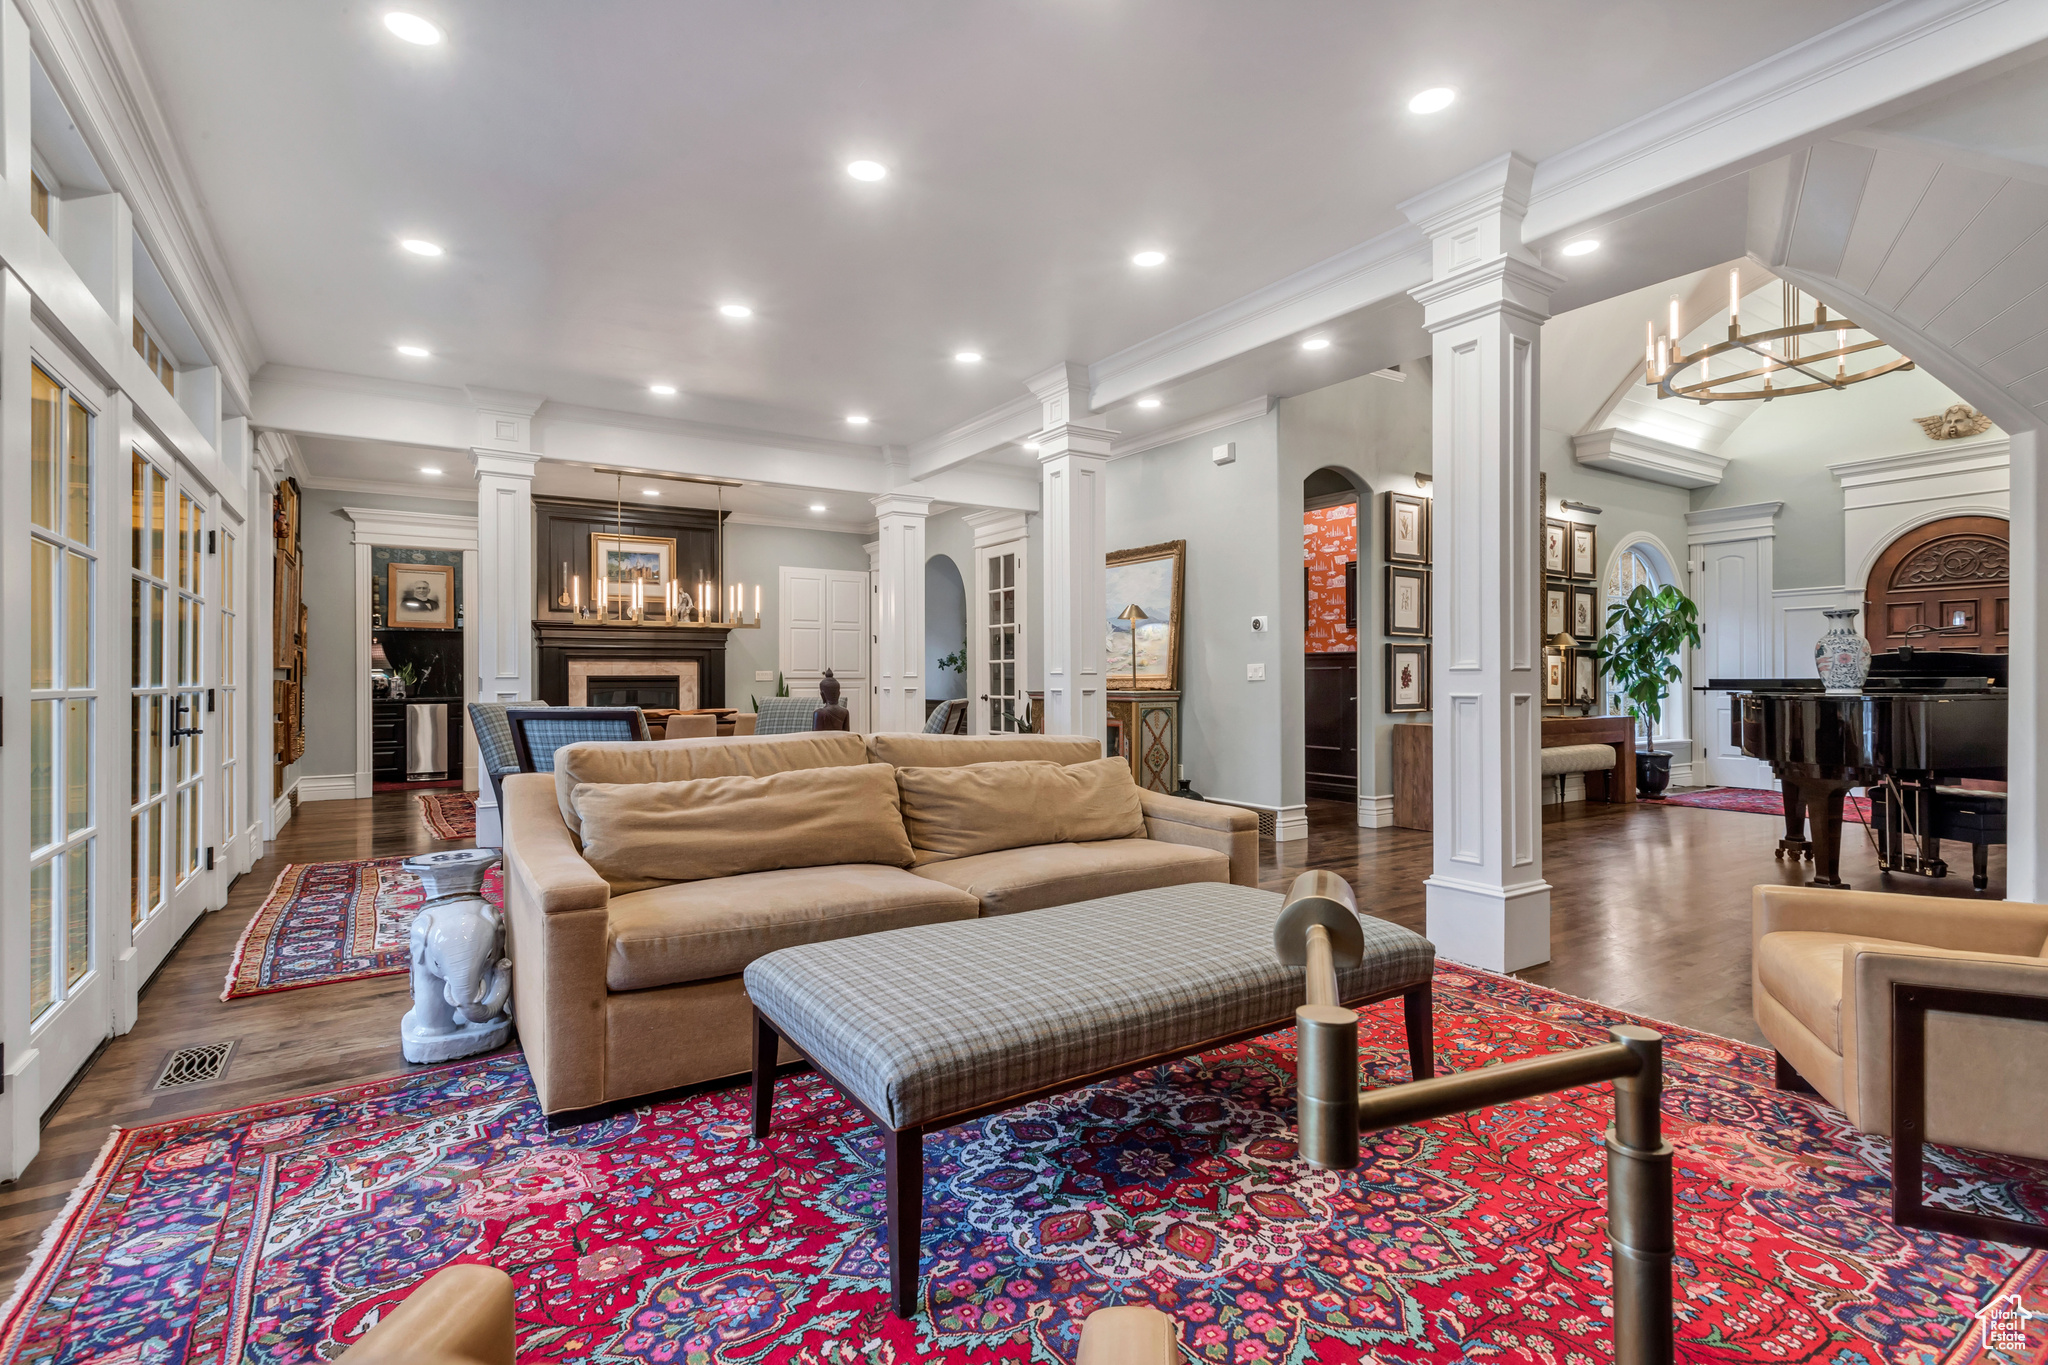 Living room featuring crown molding, dark hardwood/wood floors, and ornate columns